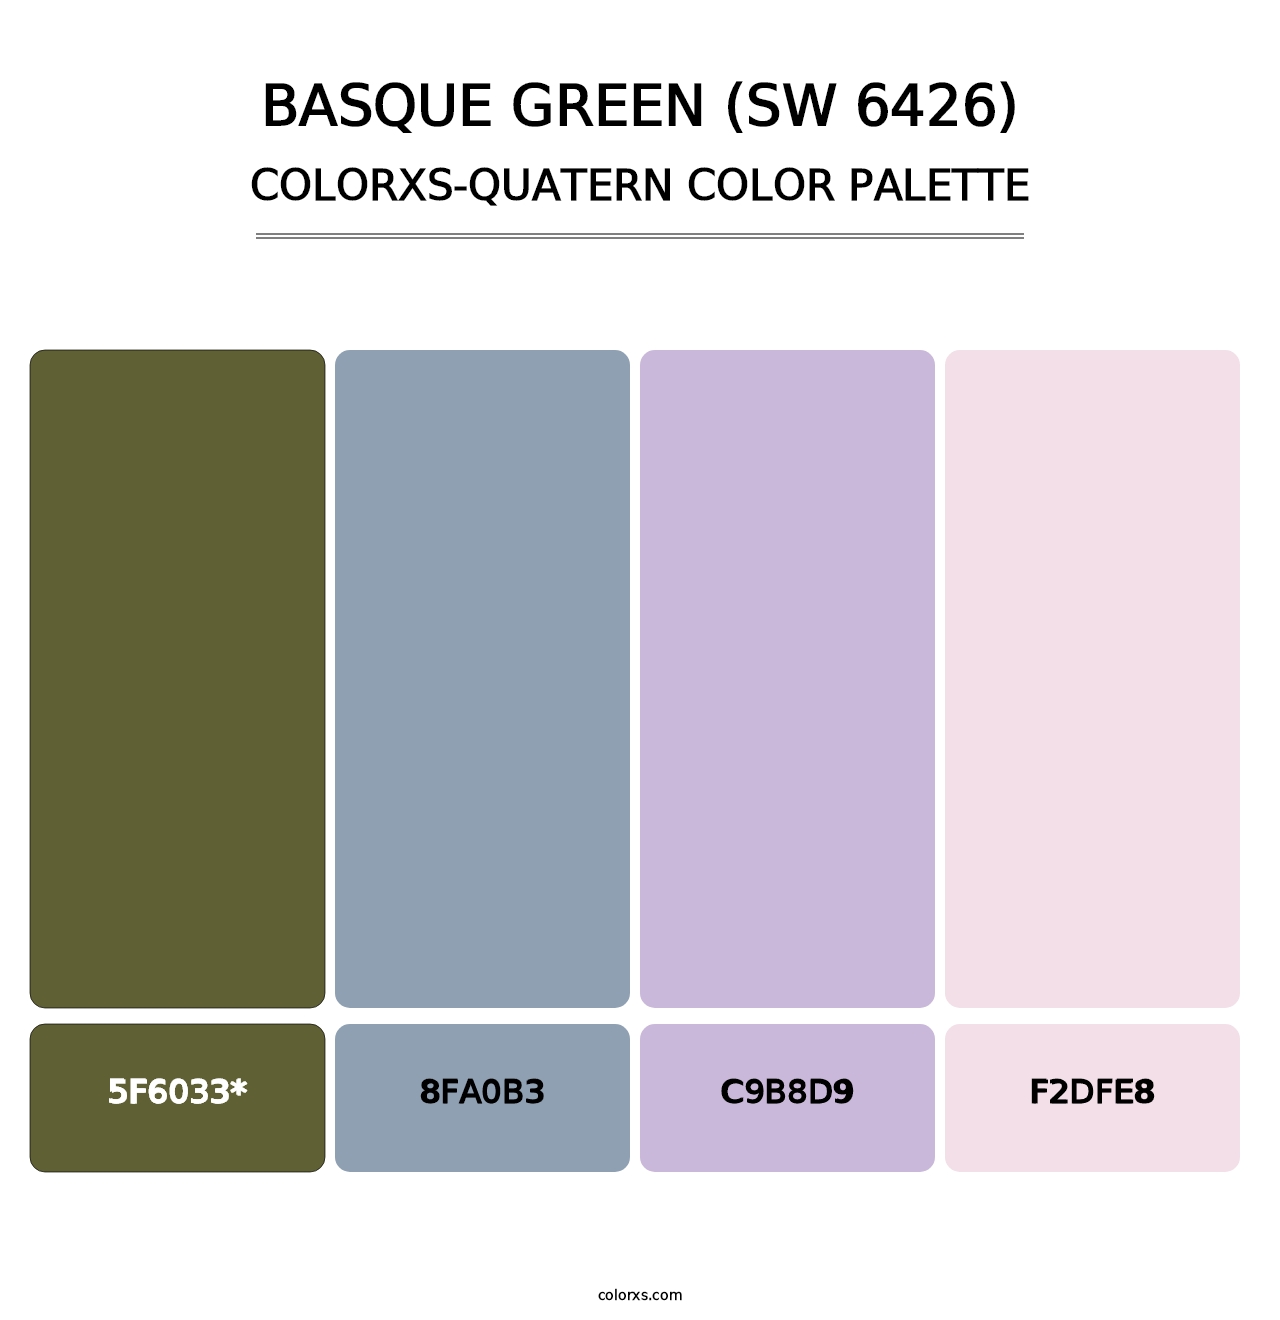 Basque Green (SW 6426) - Colorxs Quatern Palette